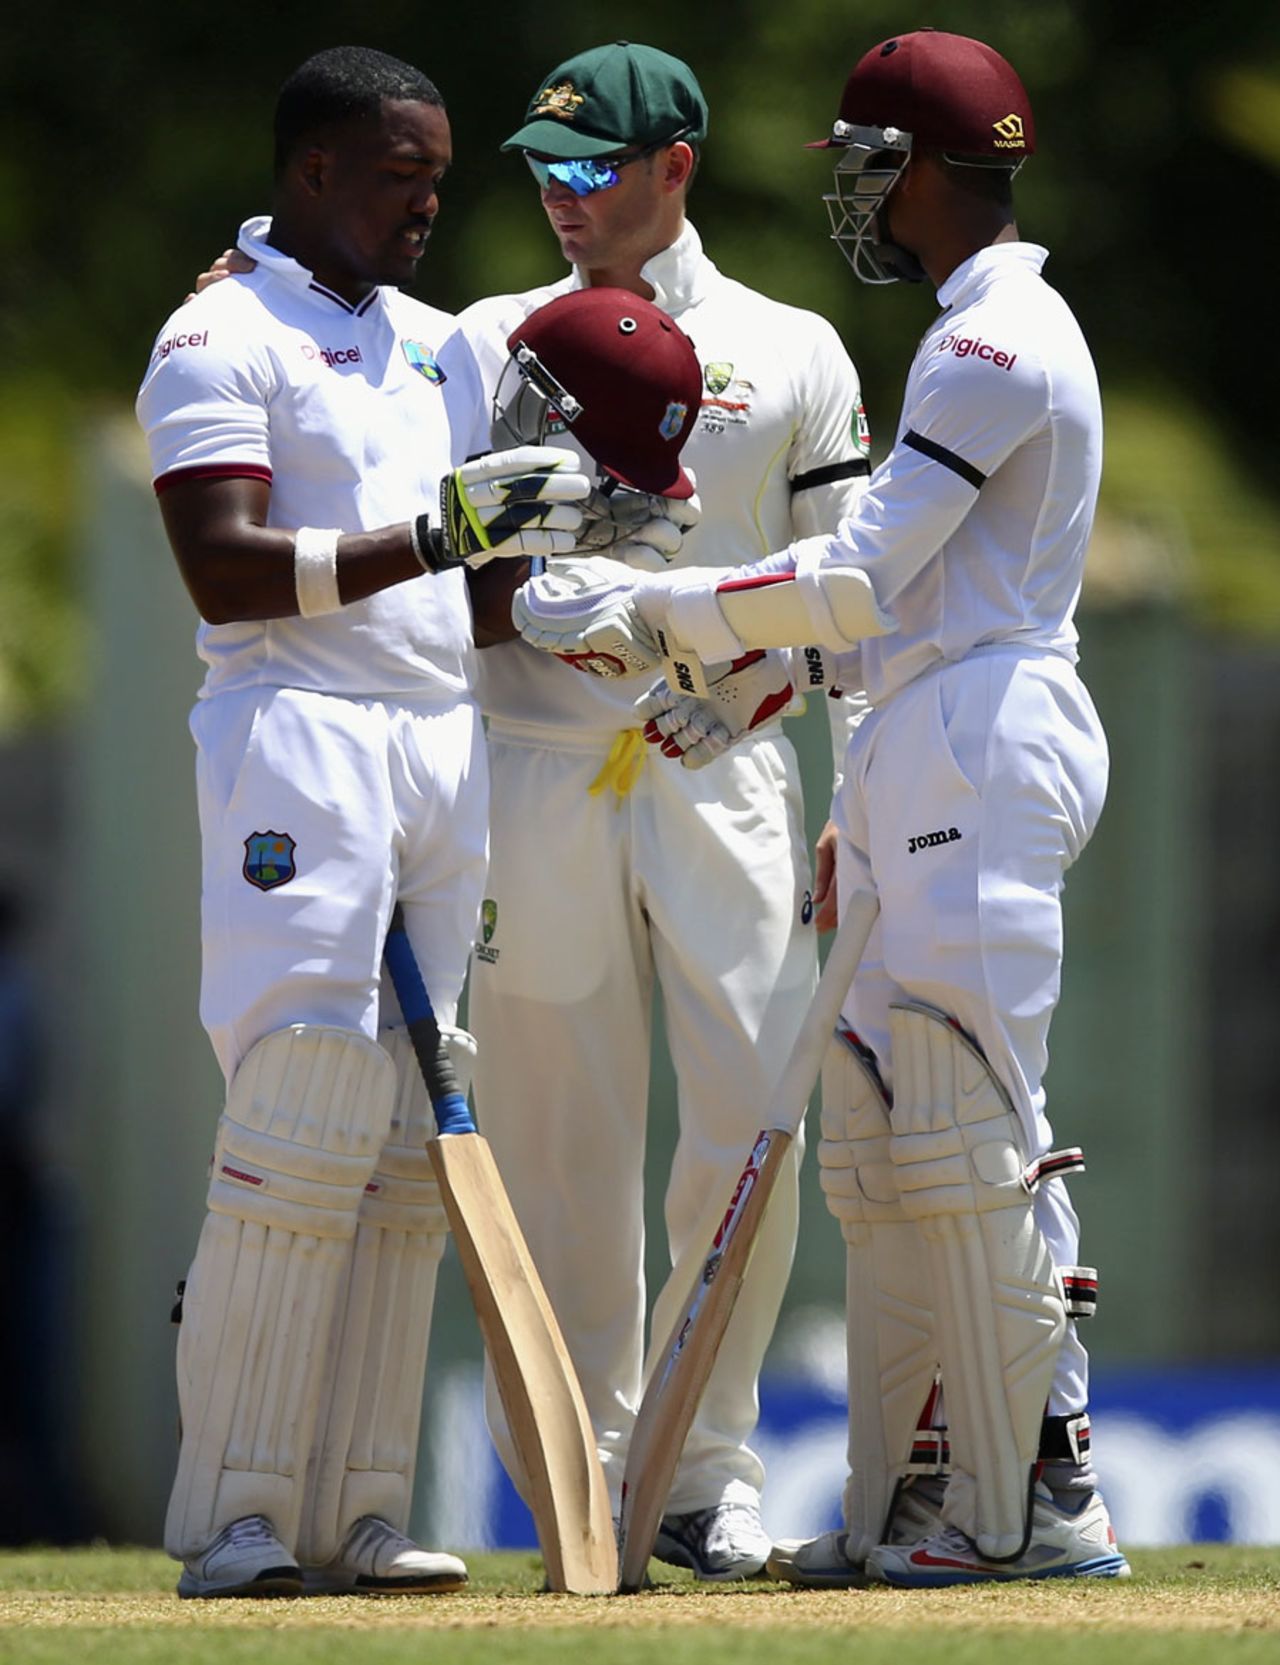 Michael Clarke checks on Darren Bravo after the latter was struck on the side of the helmet , West Indies v Australia, 1st Test, 1st day, Roseau, June 3, 2015